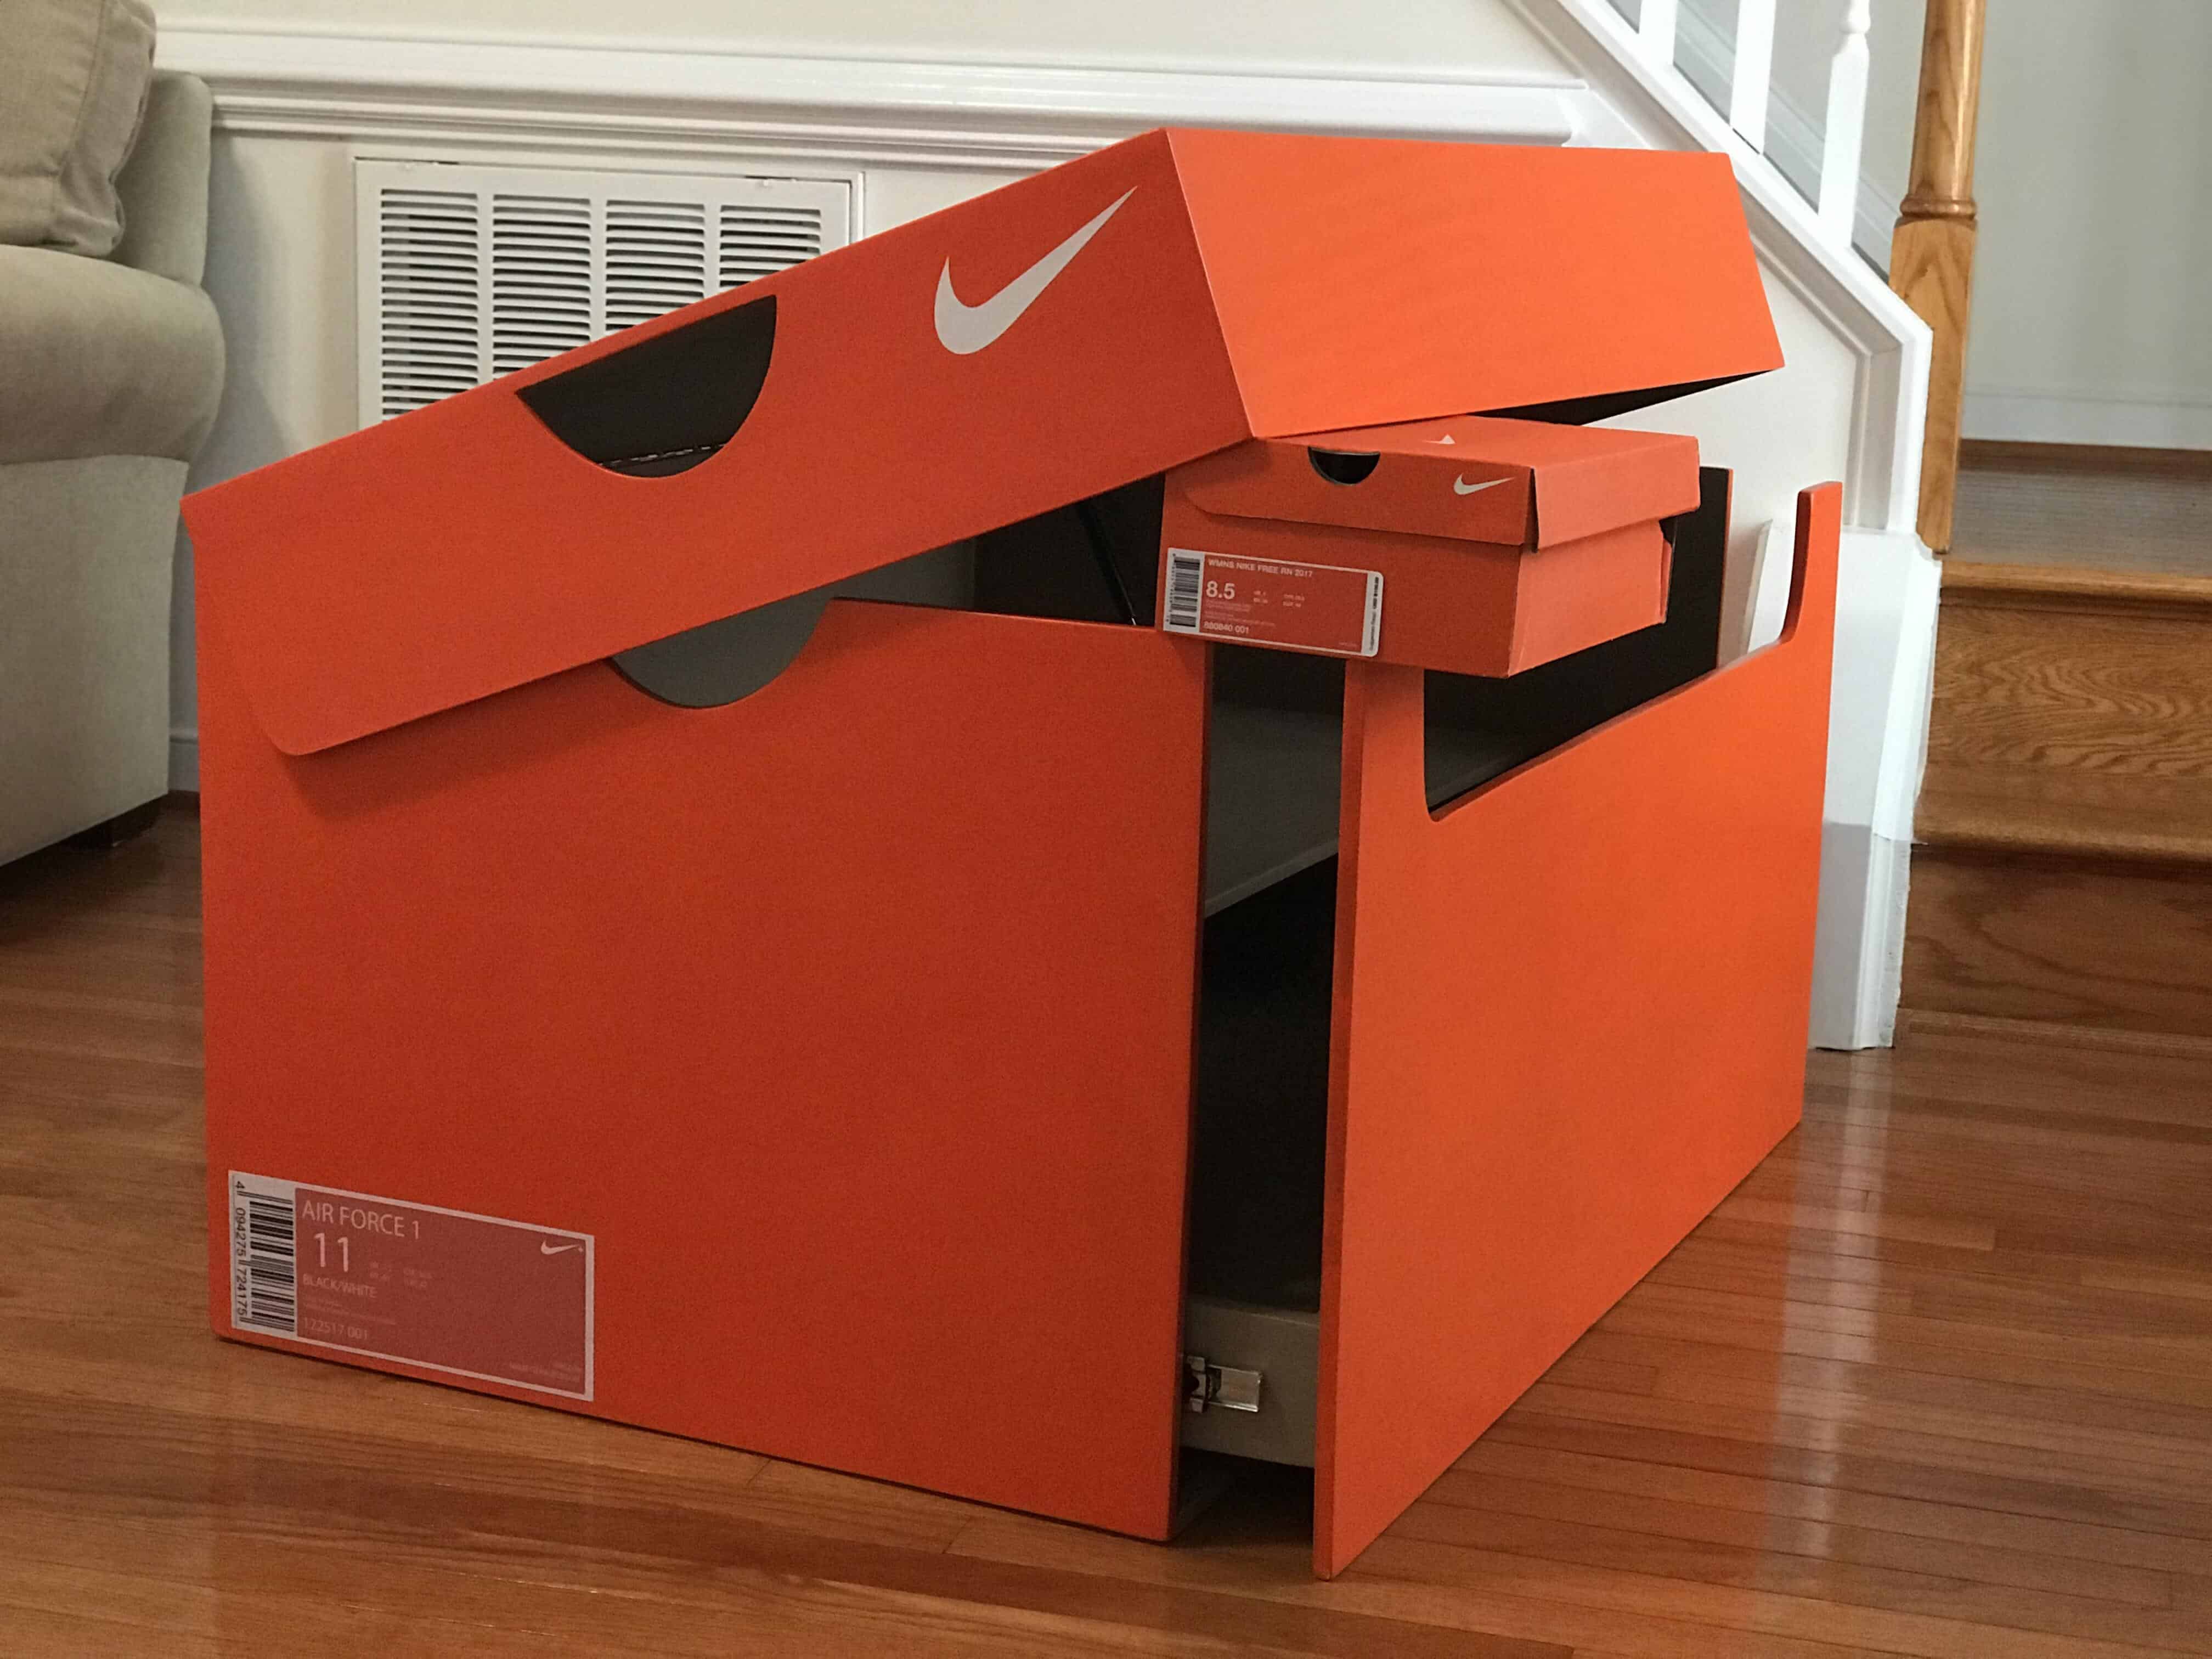 Giant Nike Shoe Box NoveltyStreet